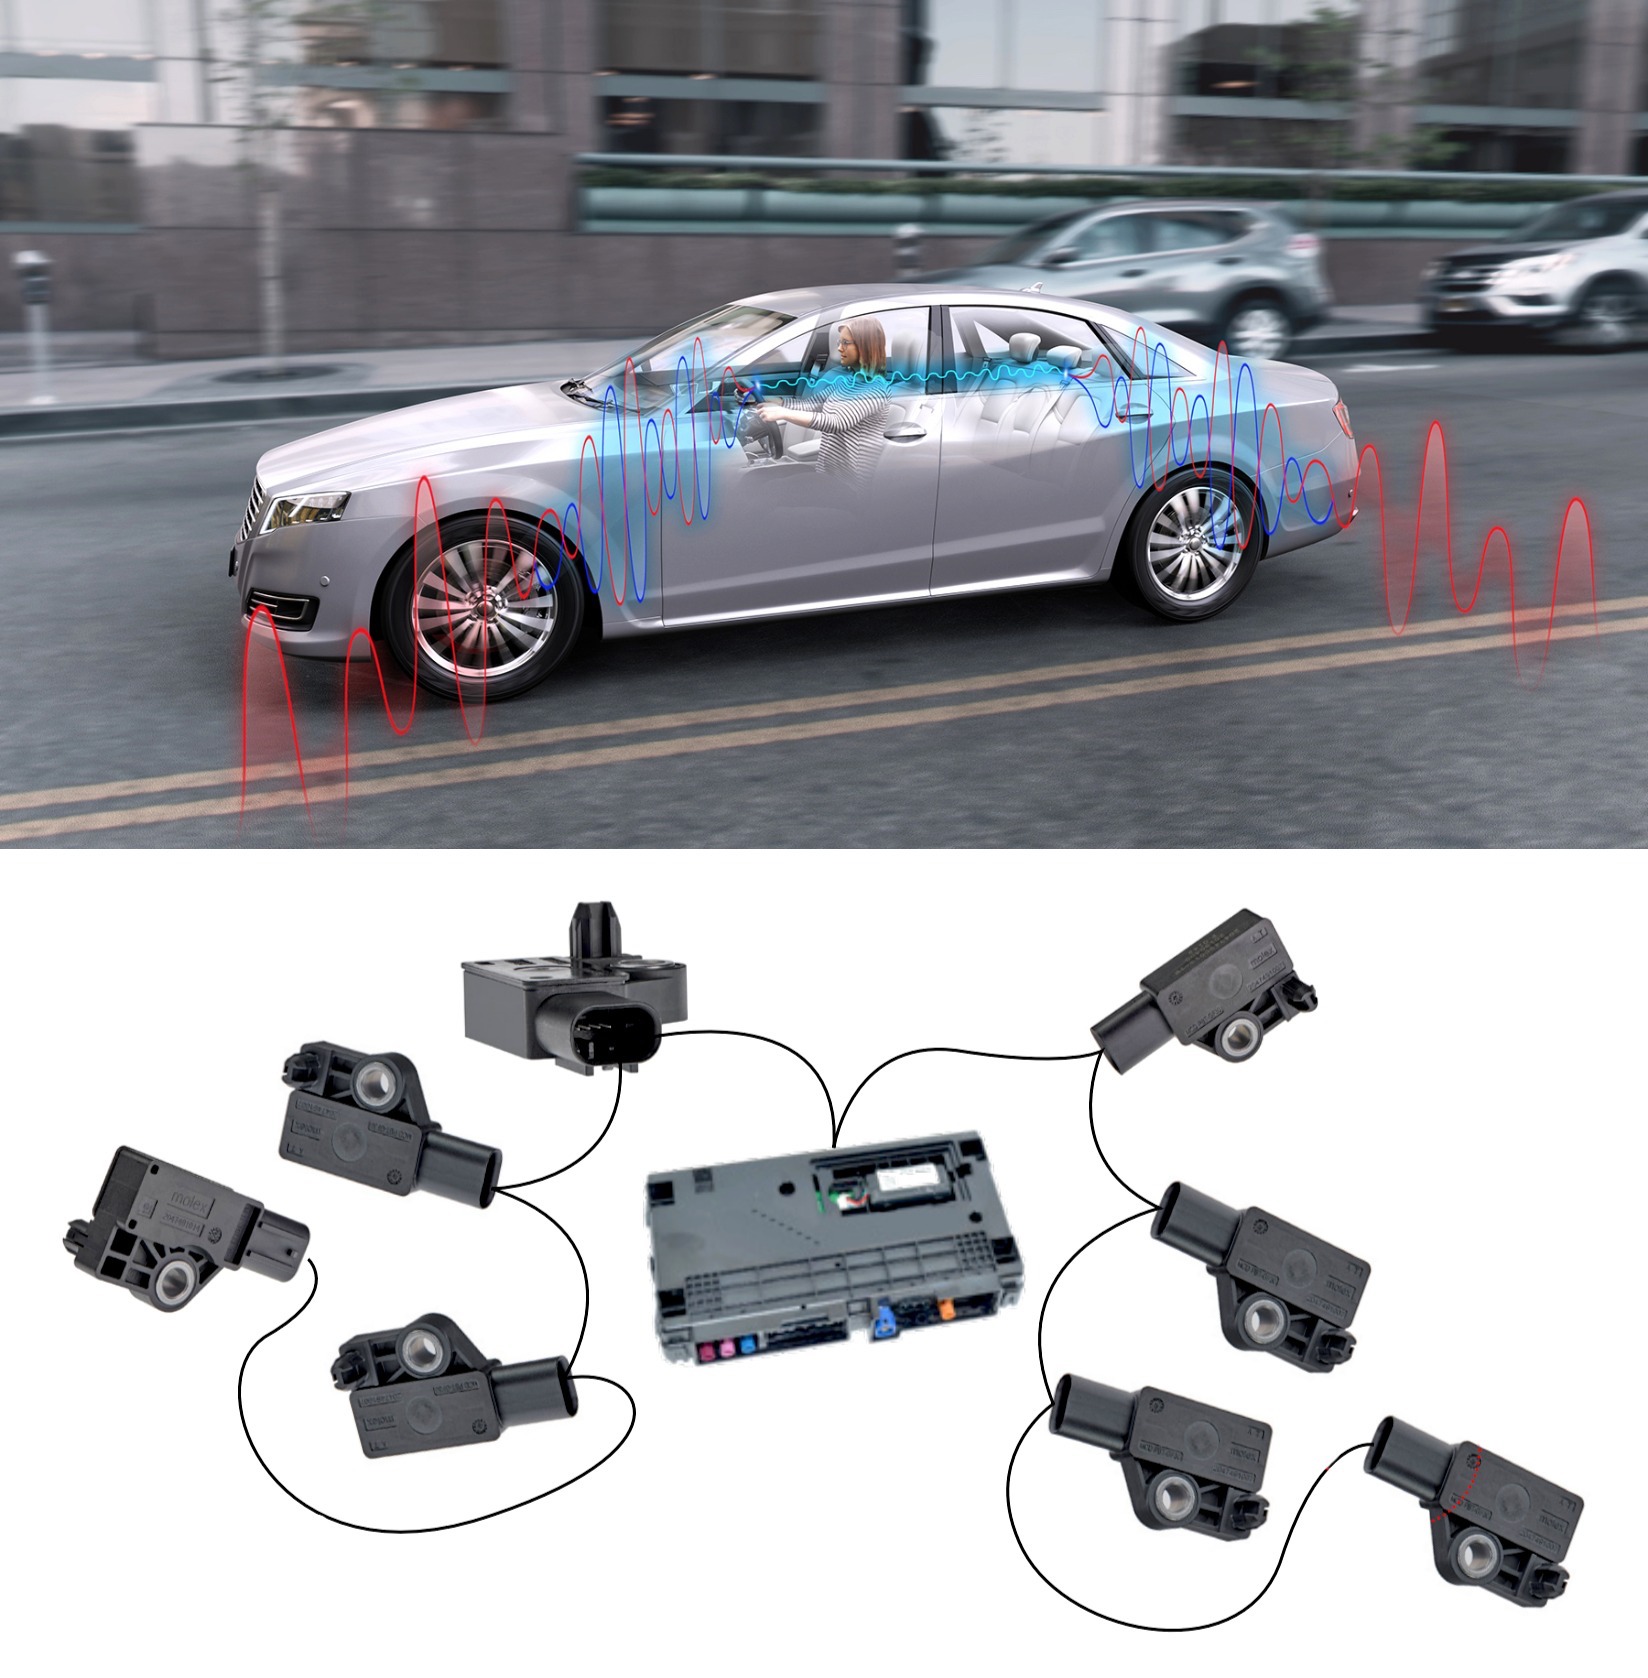 Molex accelerometer-based, road-noise-cancelling (RNC) sensor